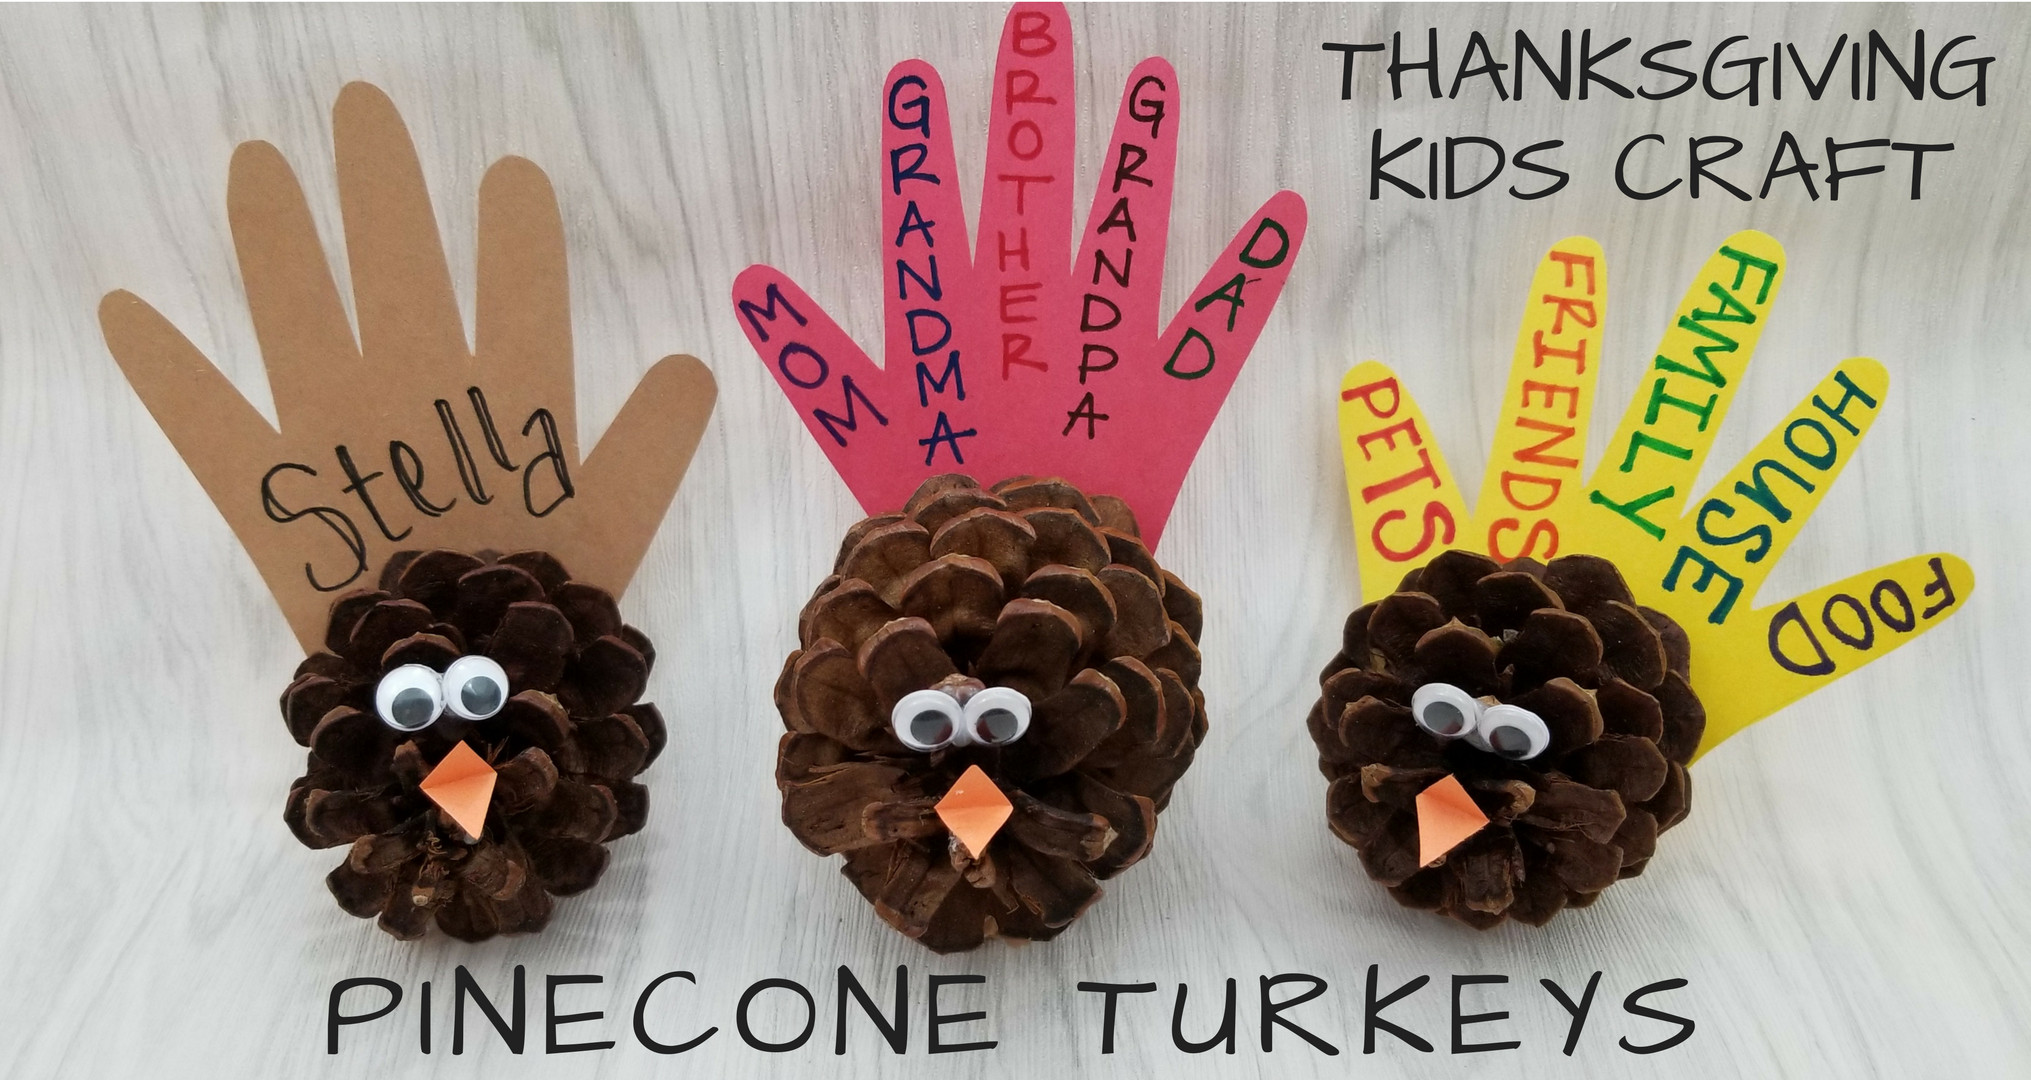 Pinecone Turkey Craft Kids
 Tag "crafts"